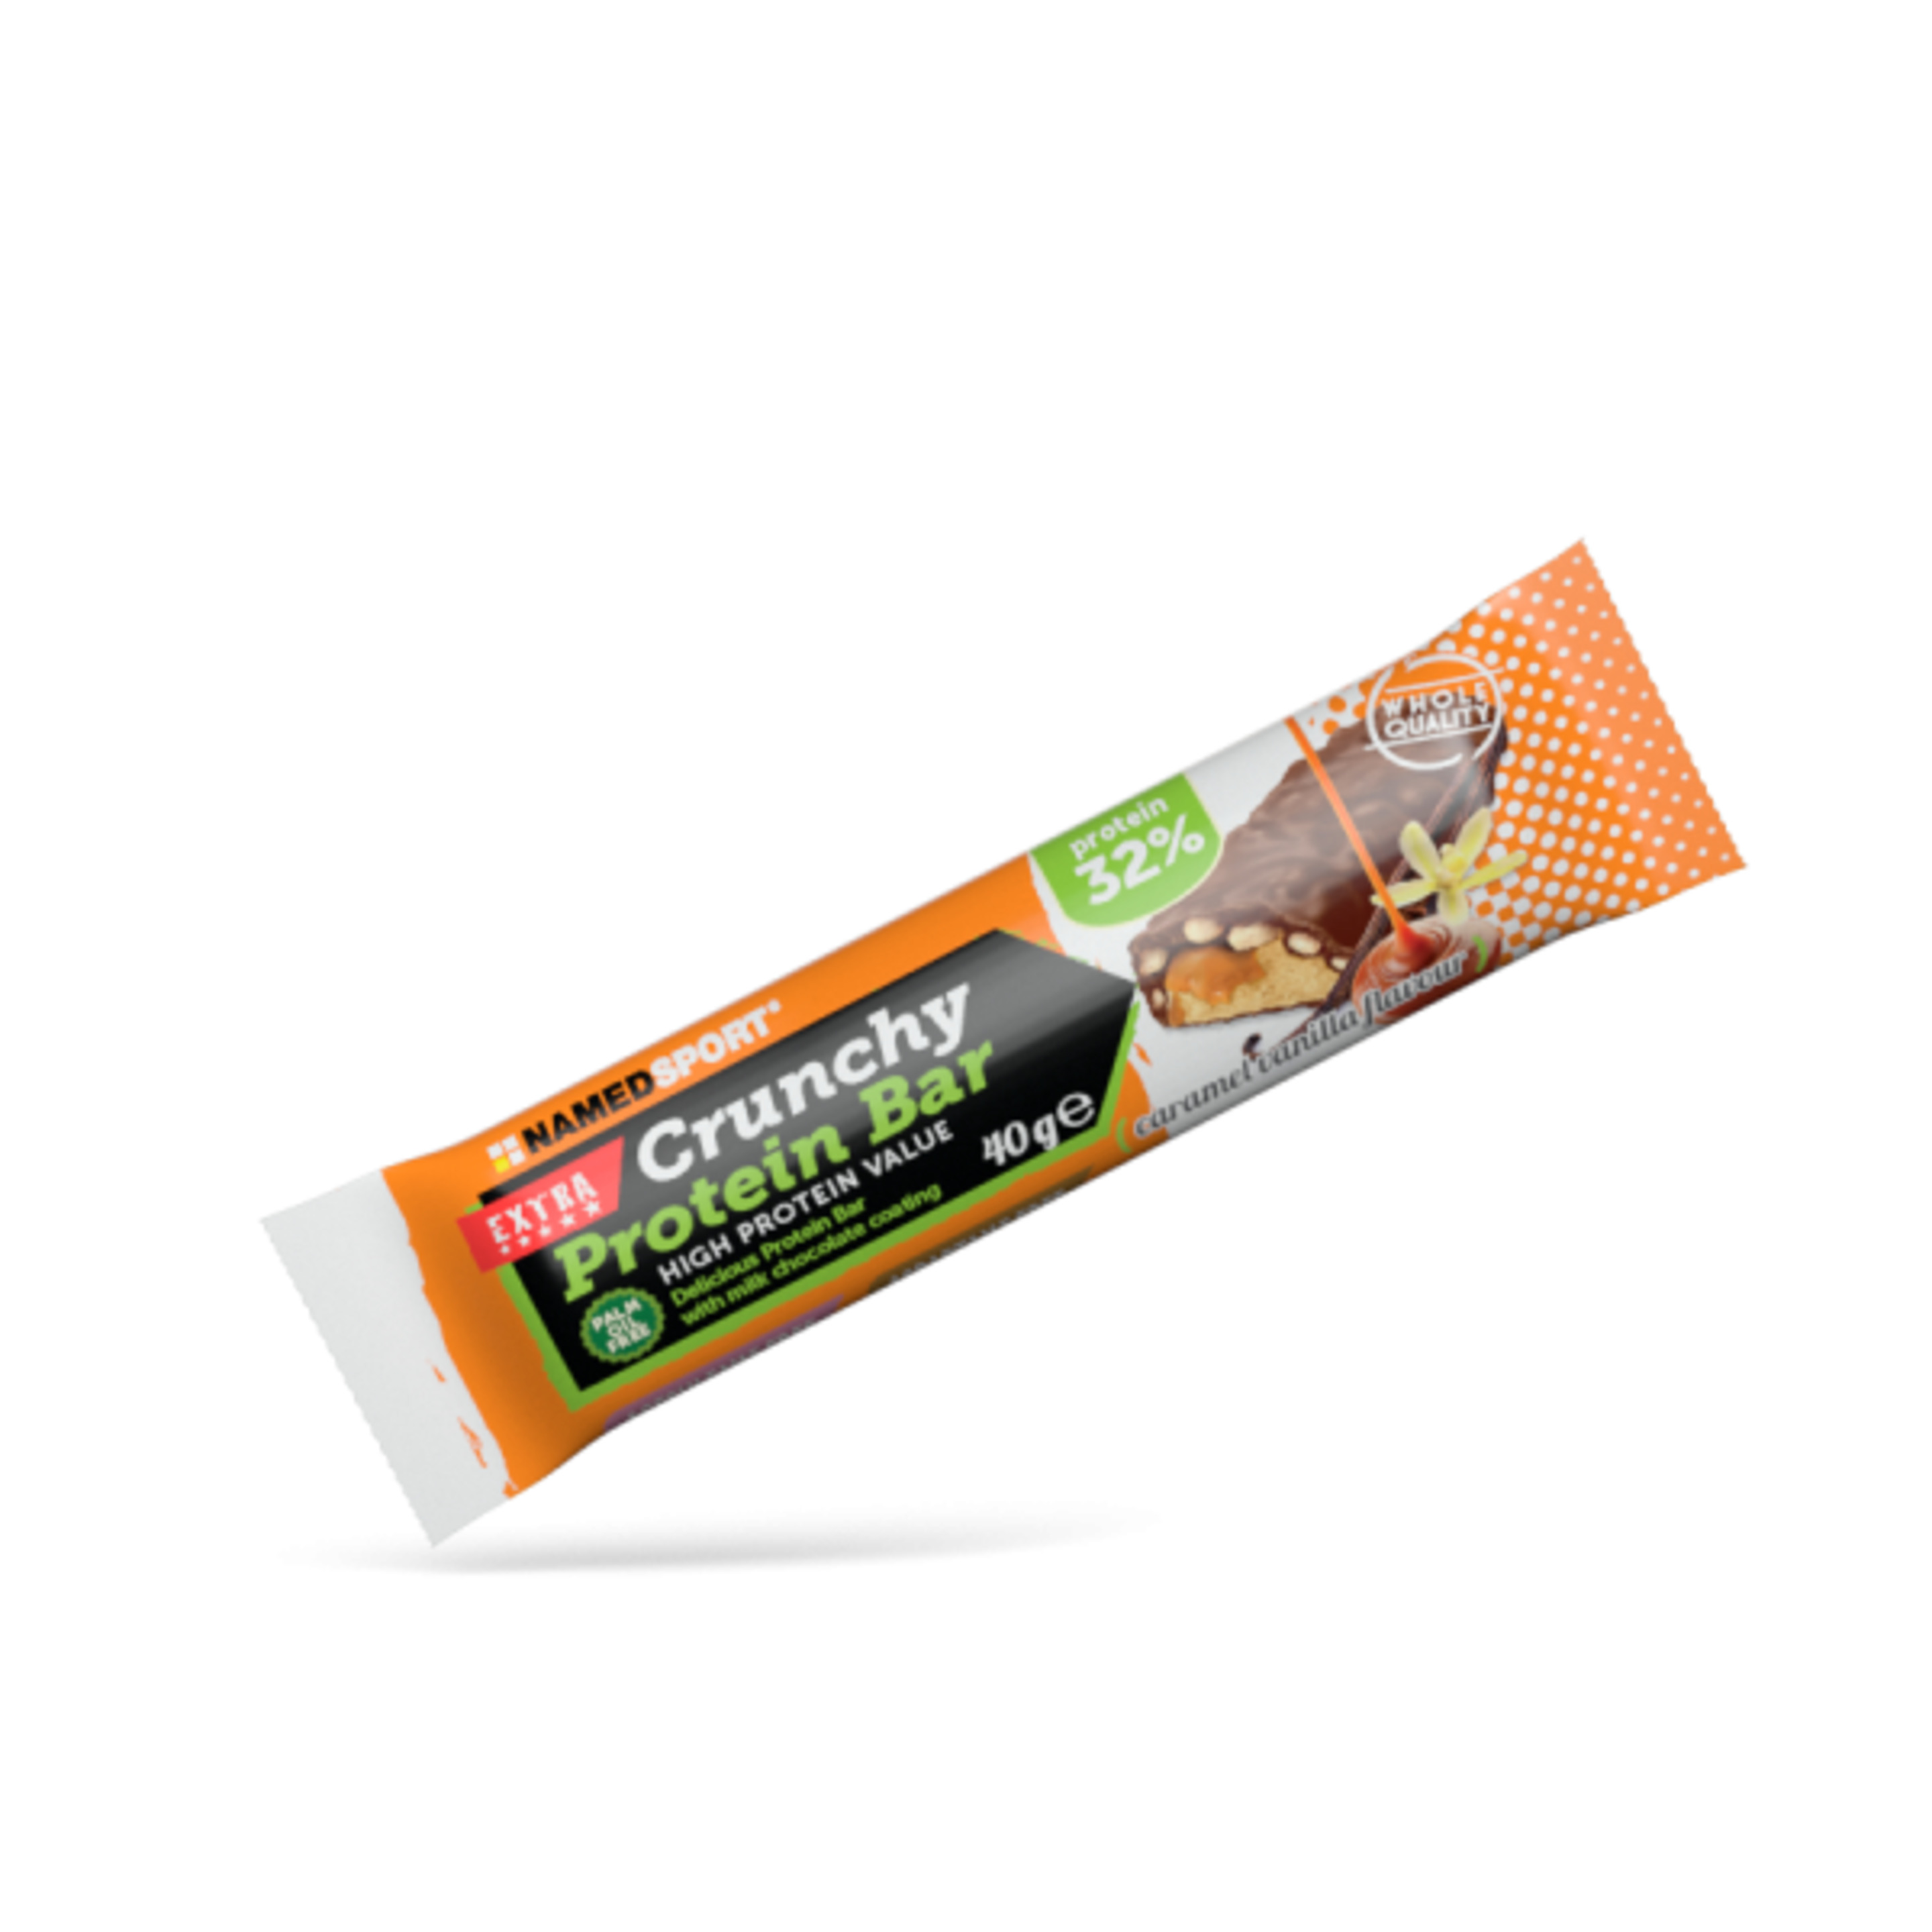 Crunchy Proteinbar Vanilla Caramel - 40g